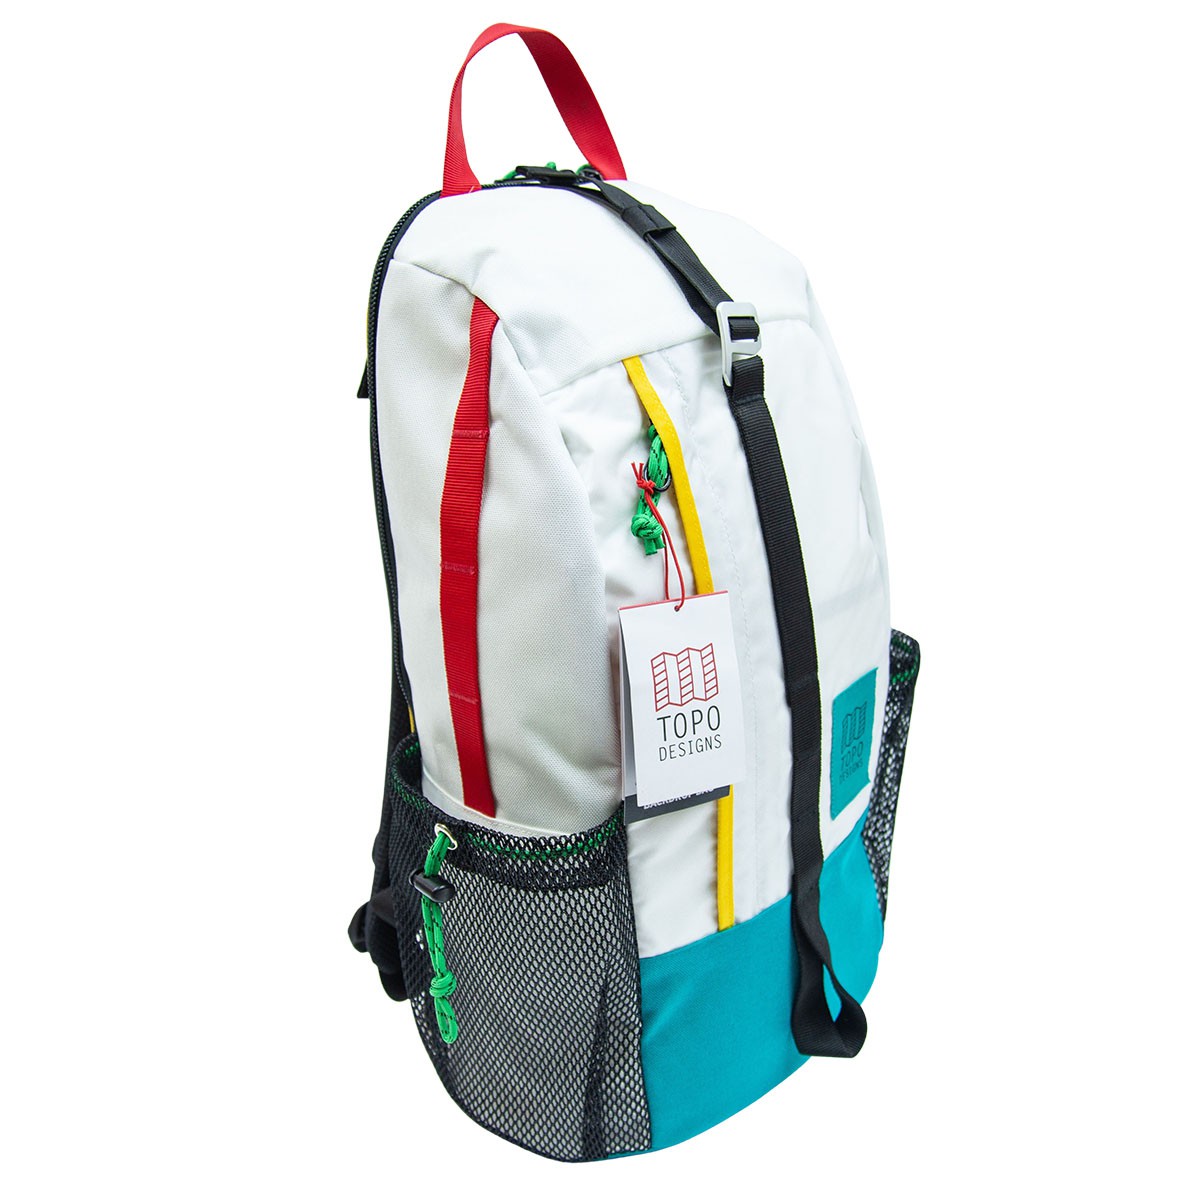 Topo Design Backdrop Bag Backdrop Bag - White 白色 背囊背包